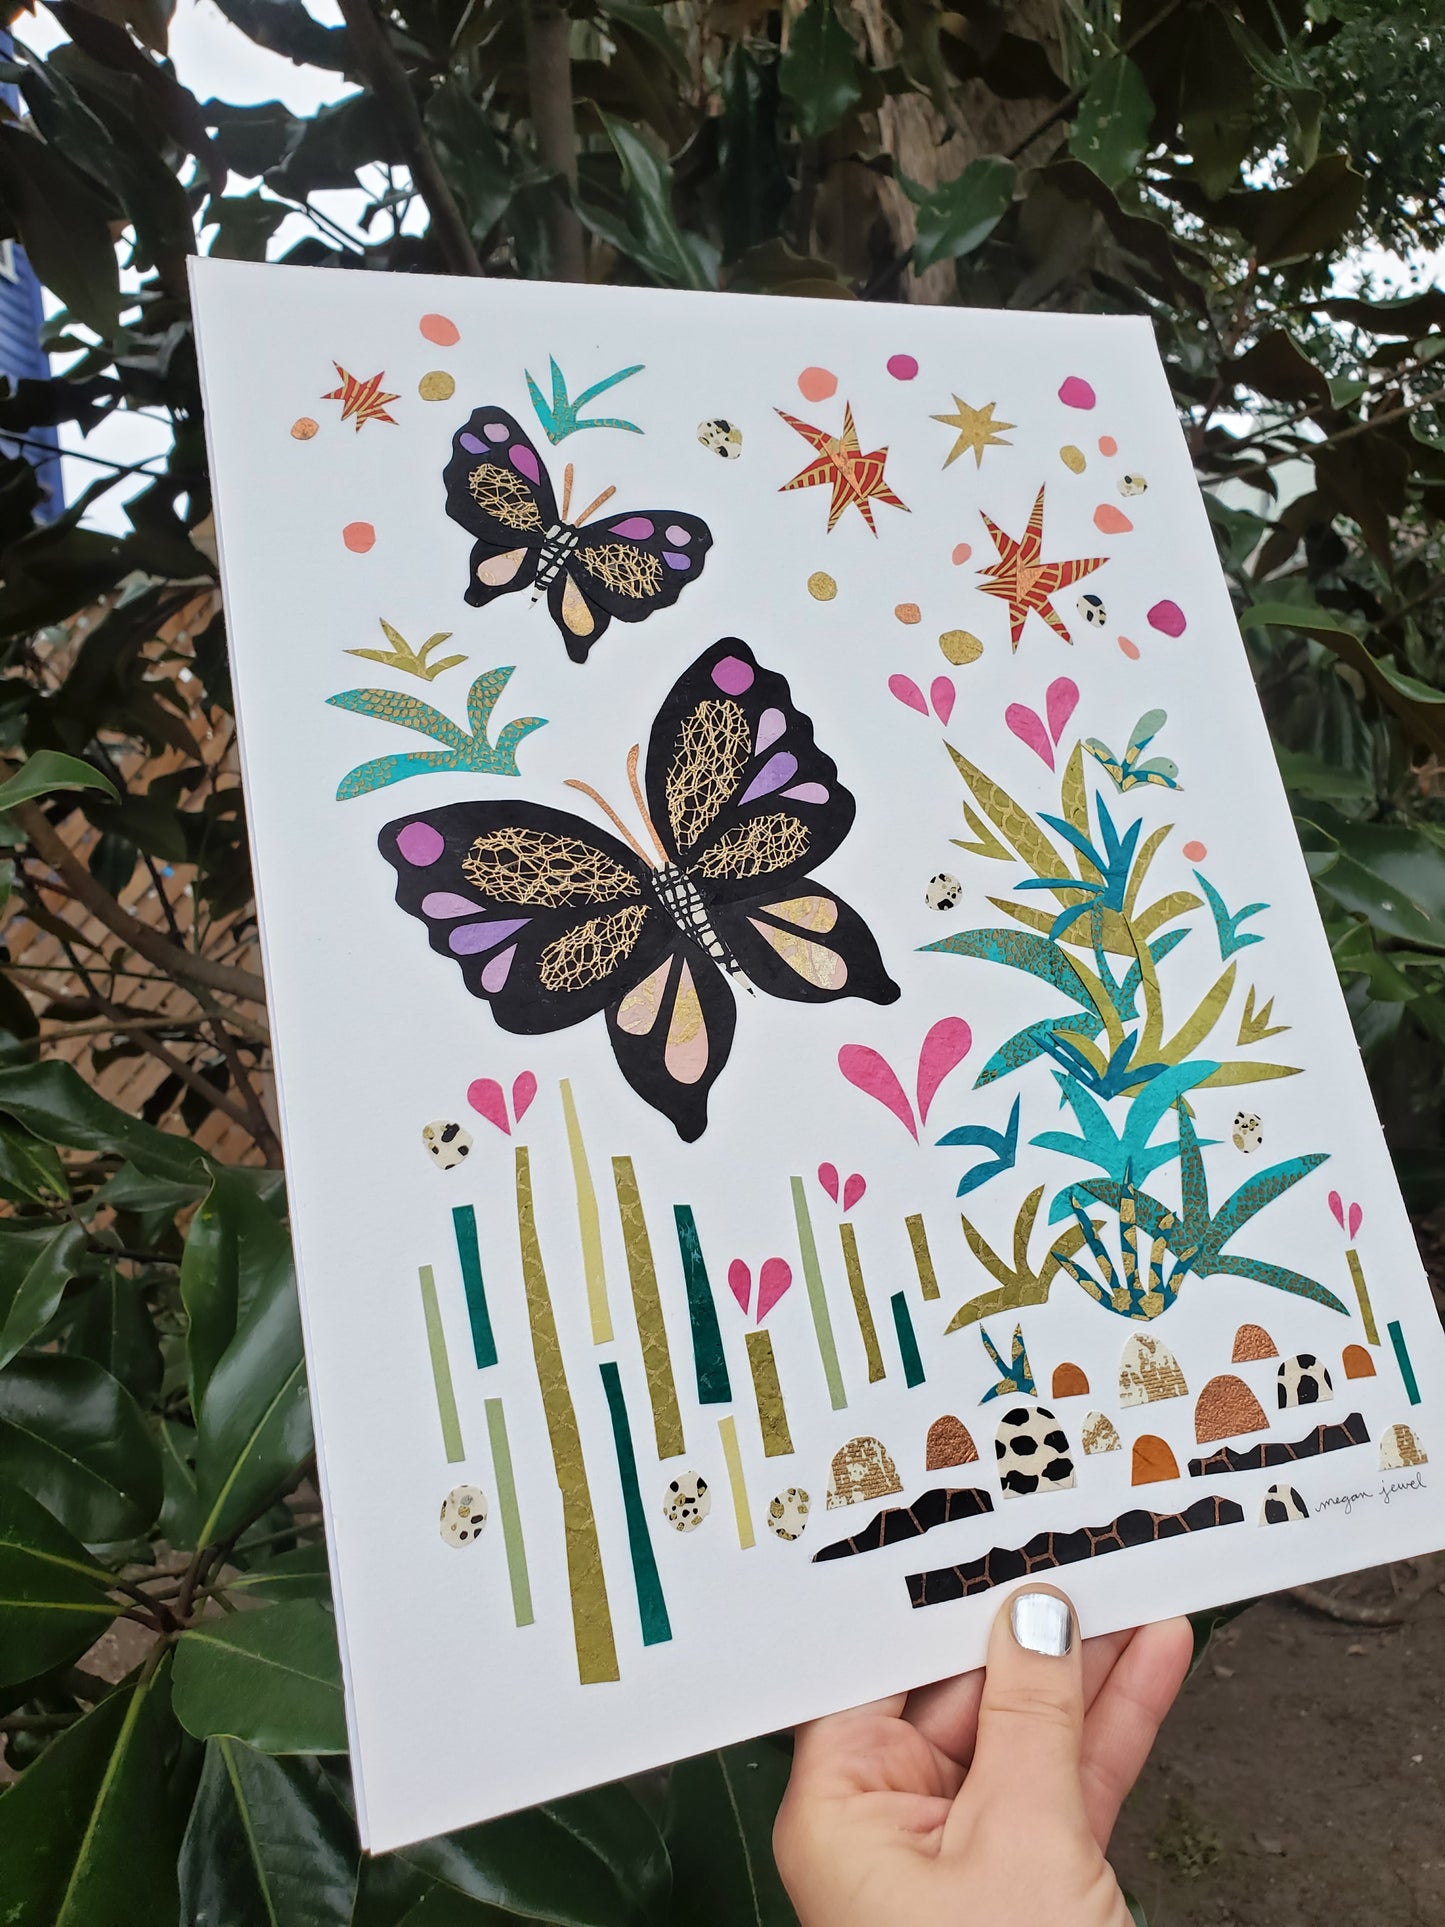 Black Butterflies - Original Collage